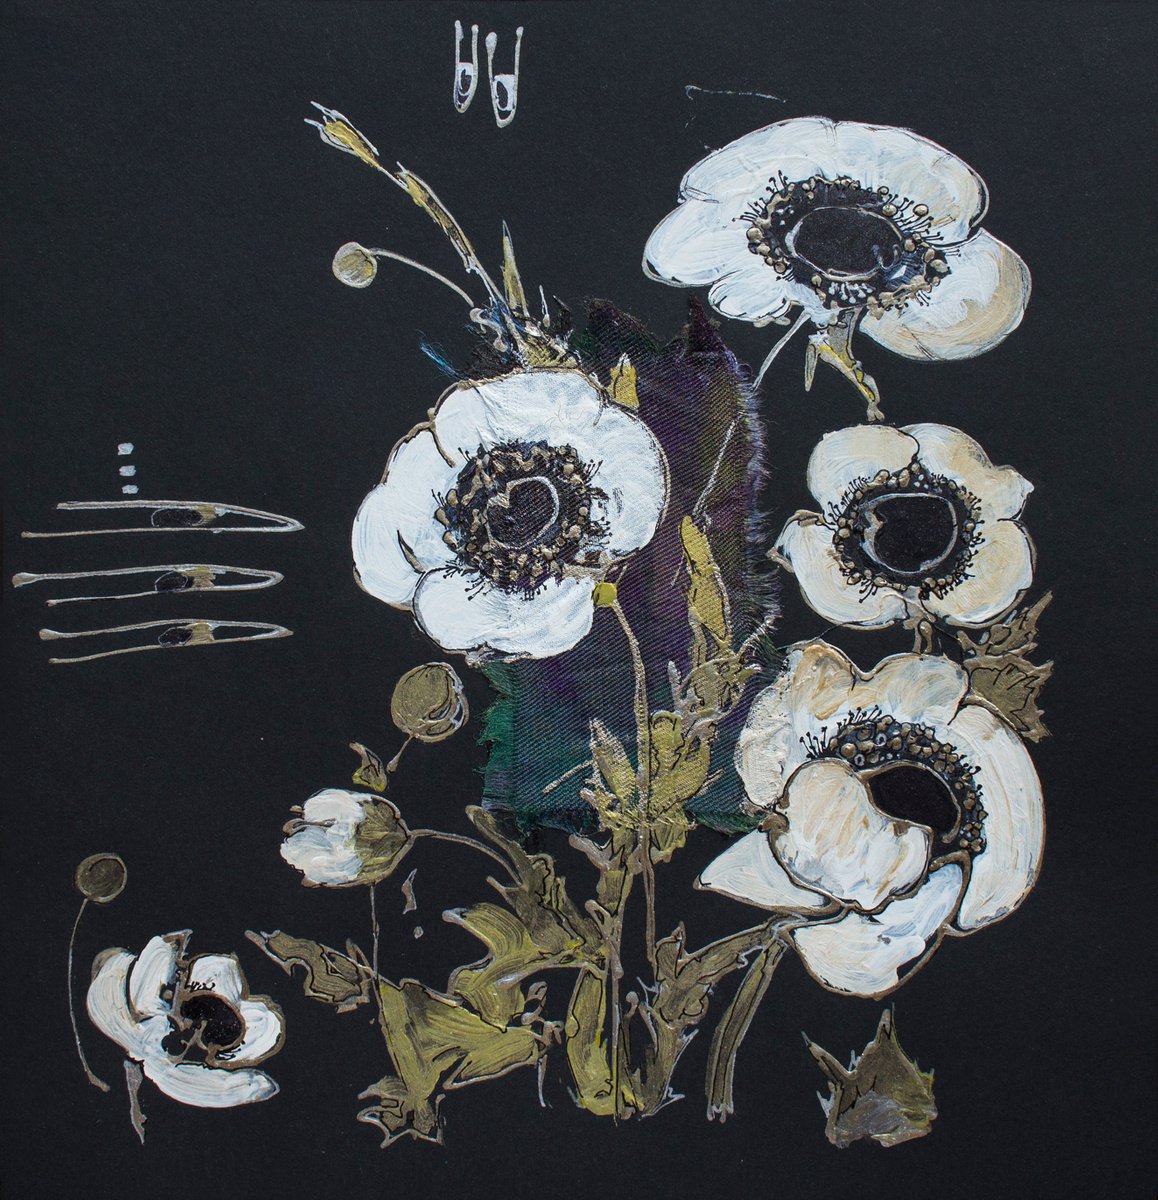 White anemones in the night garden (White anemones on black) by Vlada Lisowska